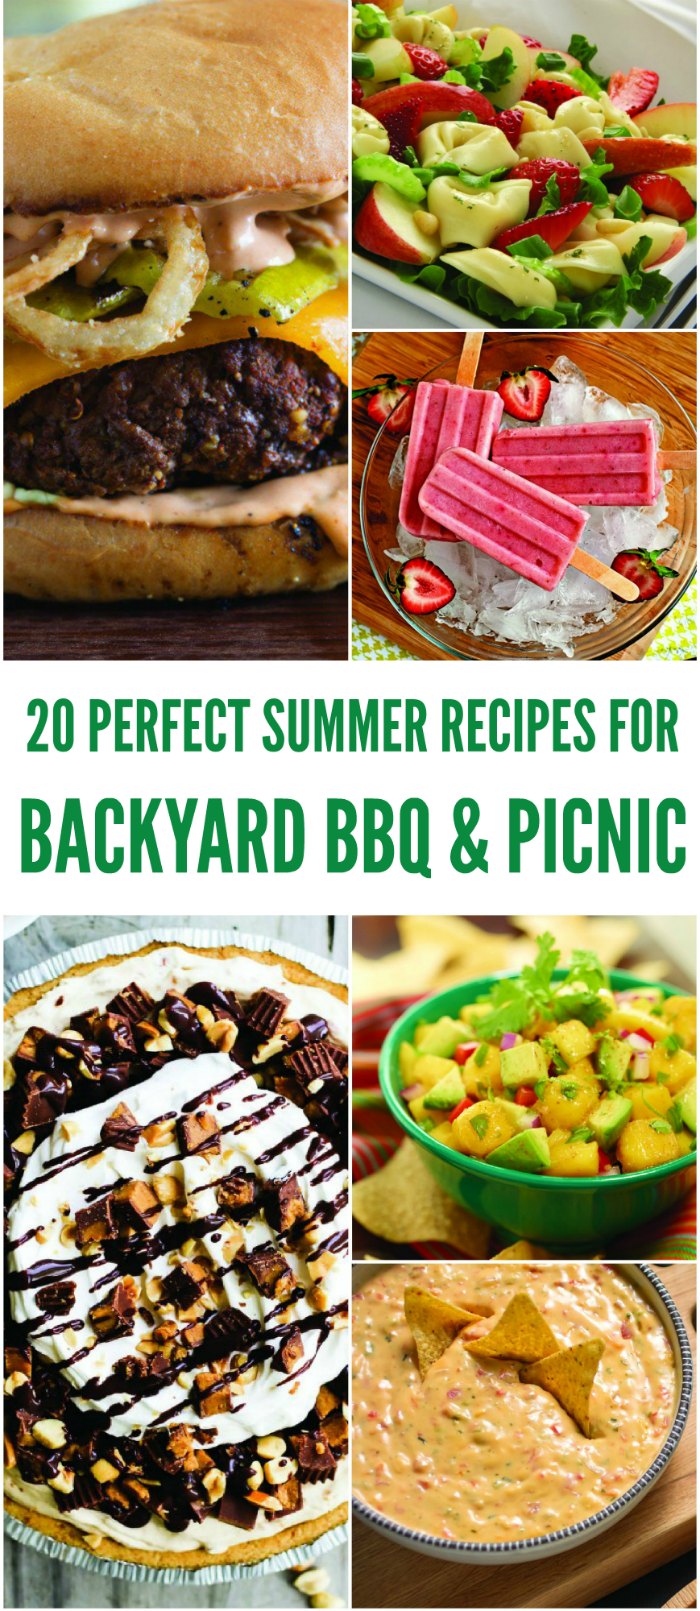 20 Easy Picnic Recipes for Summer BBQs | The Jenny Evolution